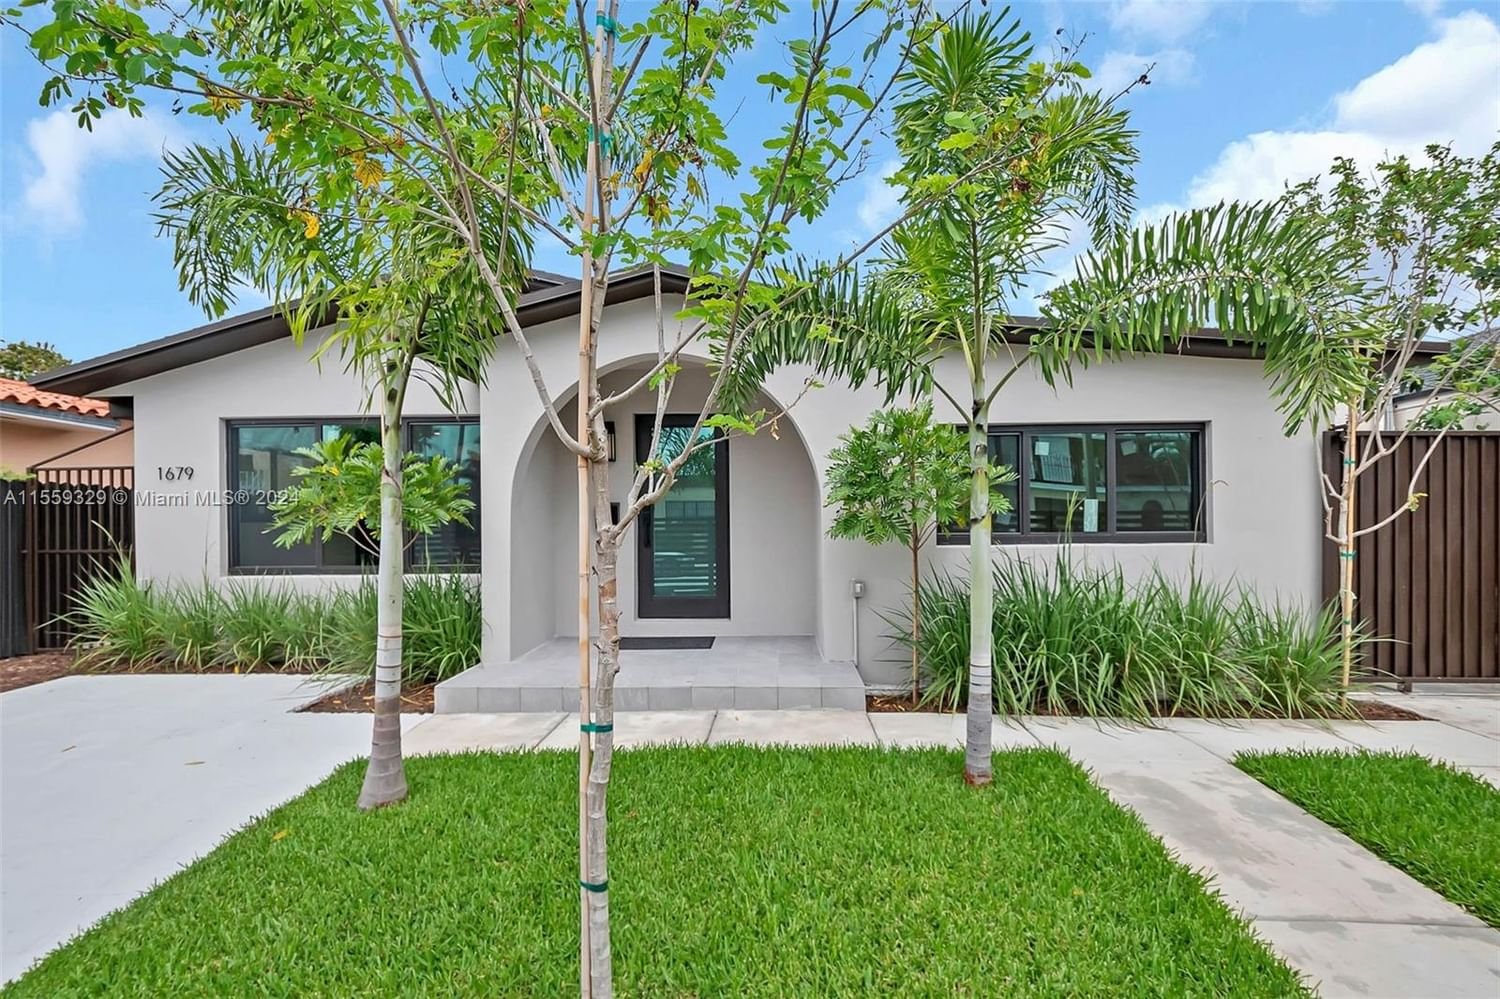 Real estate property located at 1679 14th Ter, Miami-Dade County, SEVILLE, Miami, FL